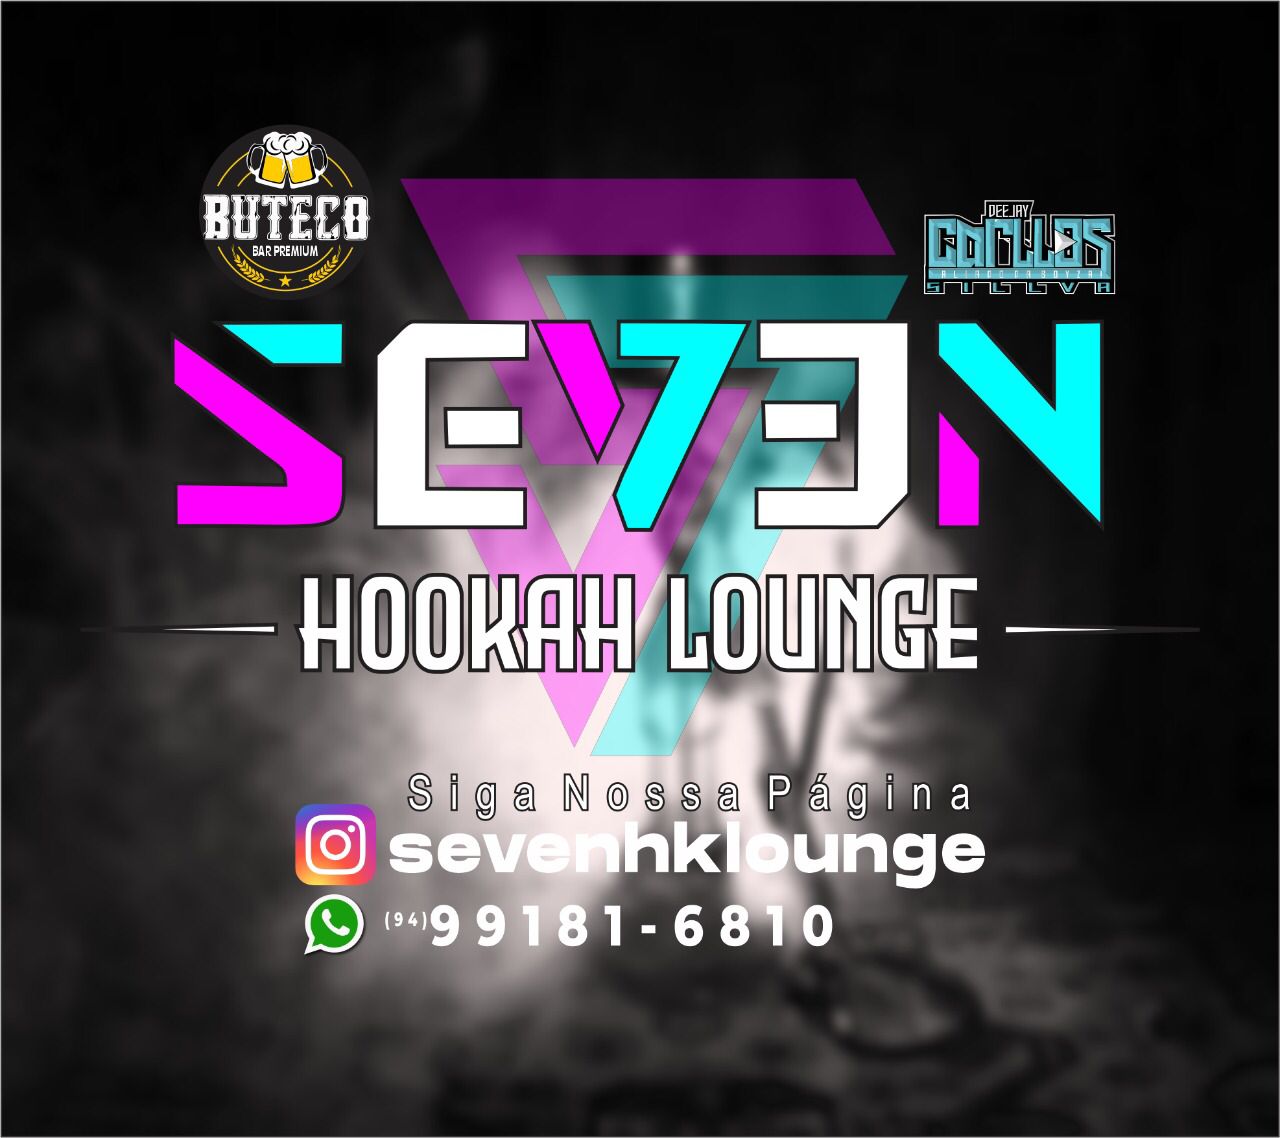 Logo da empresa Seven Hookah Lounge